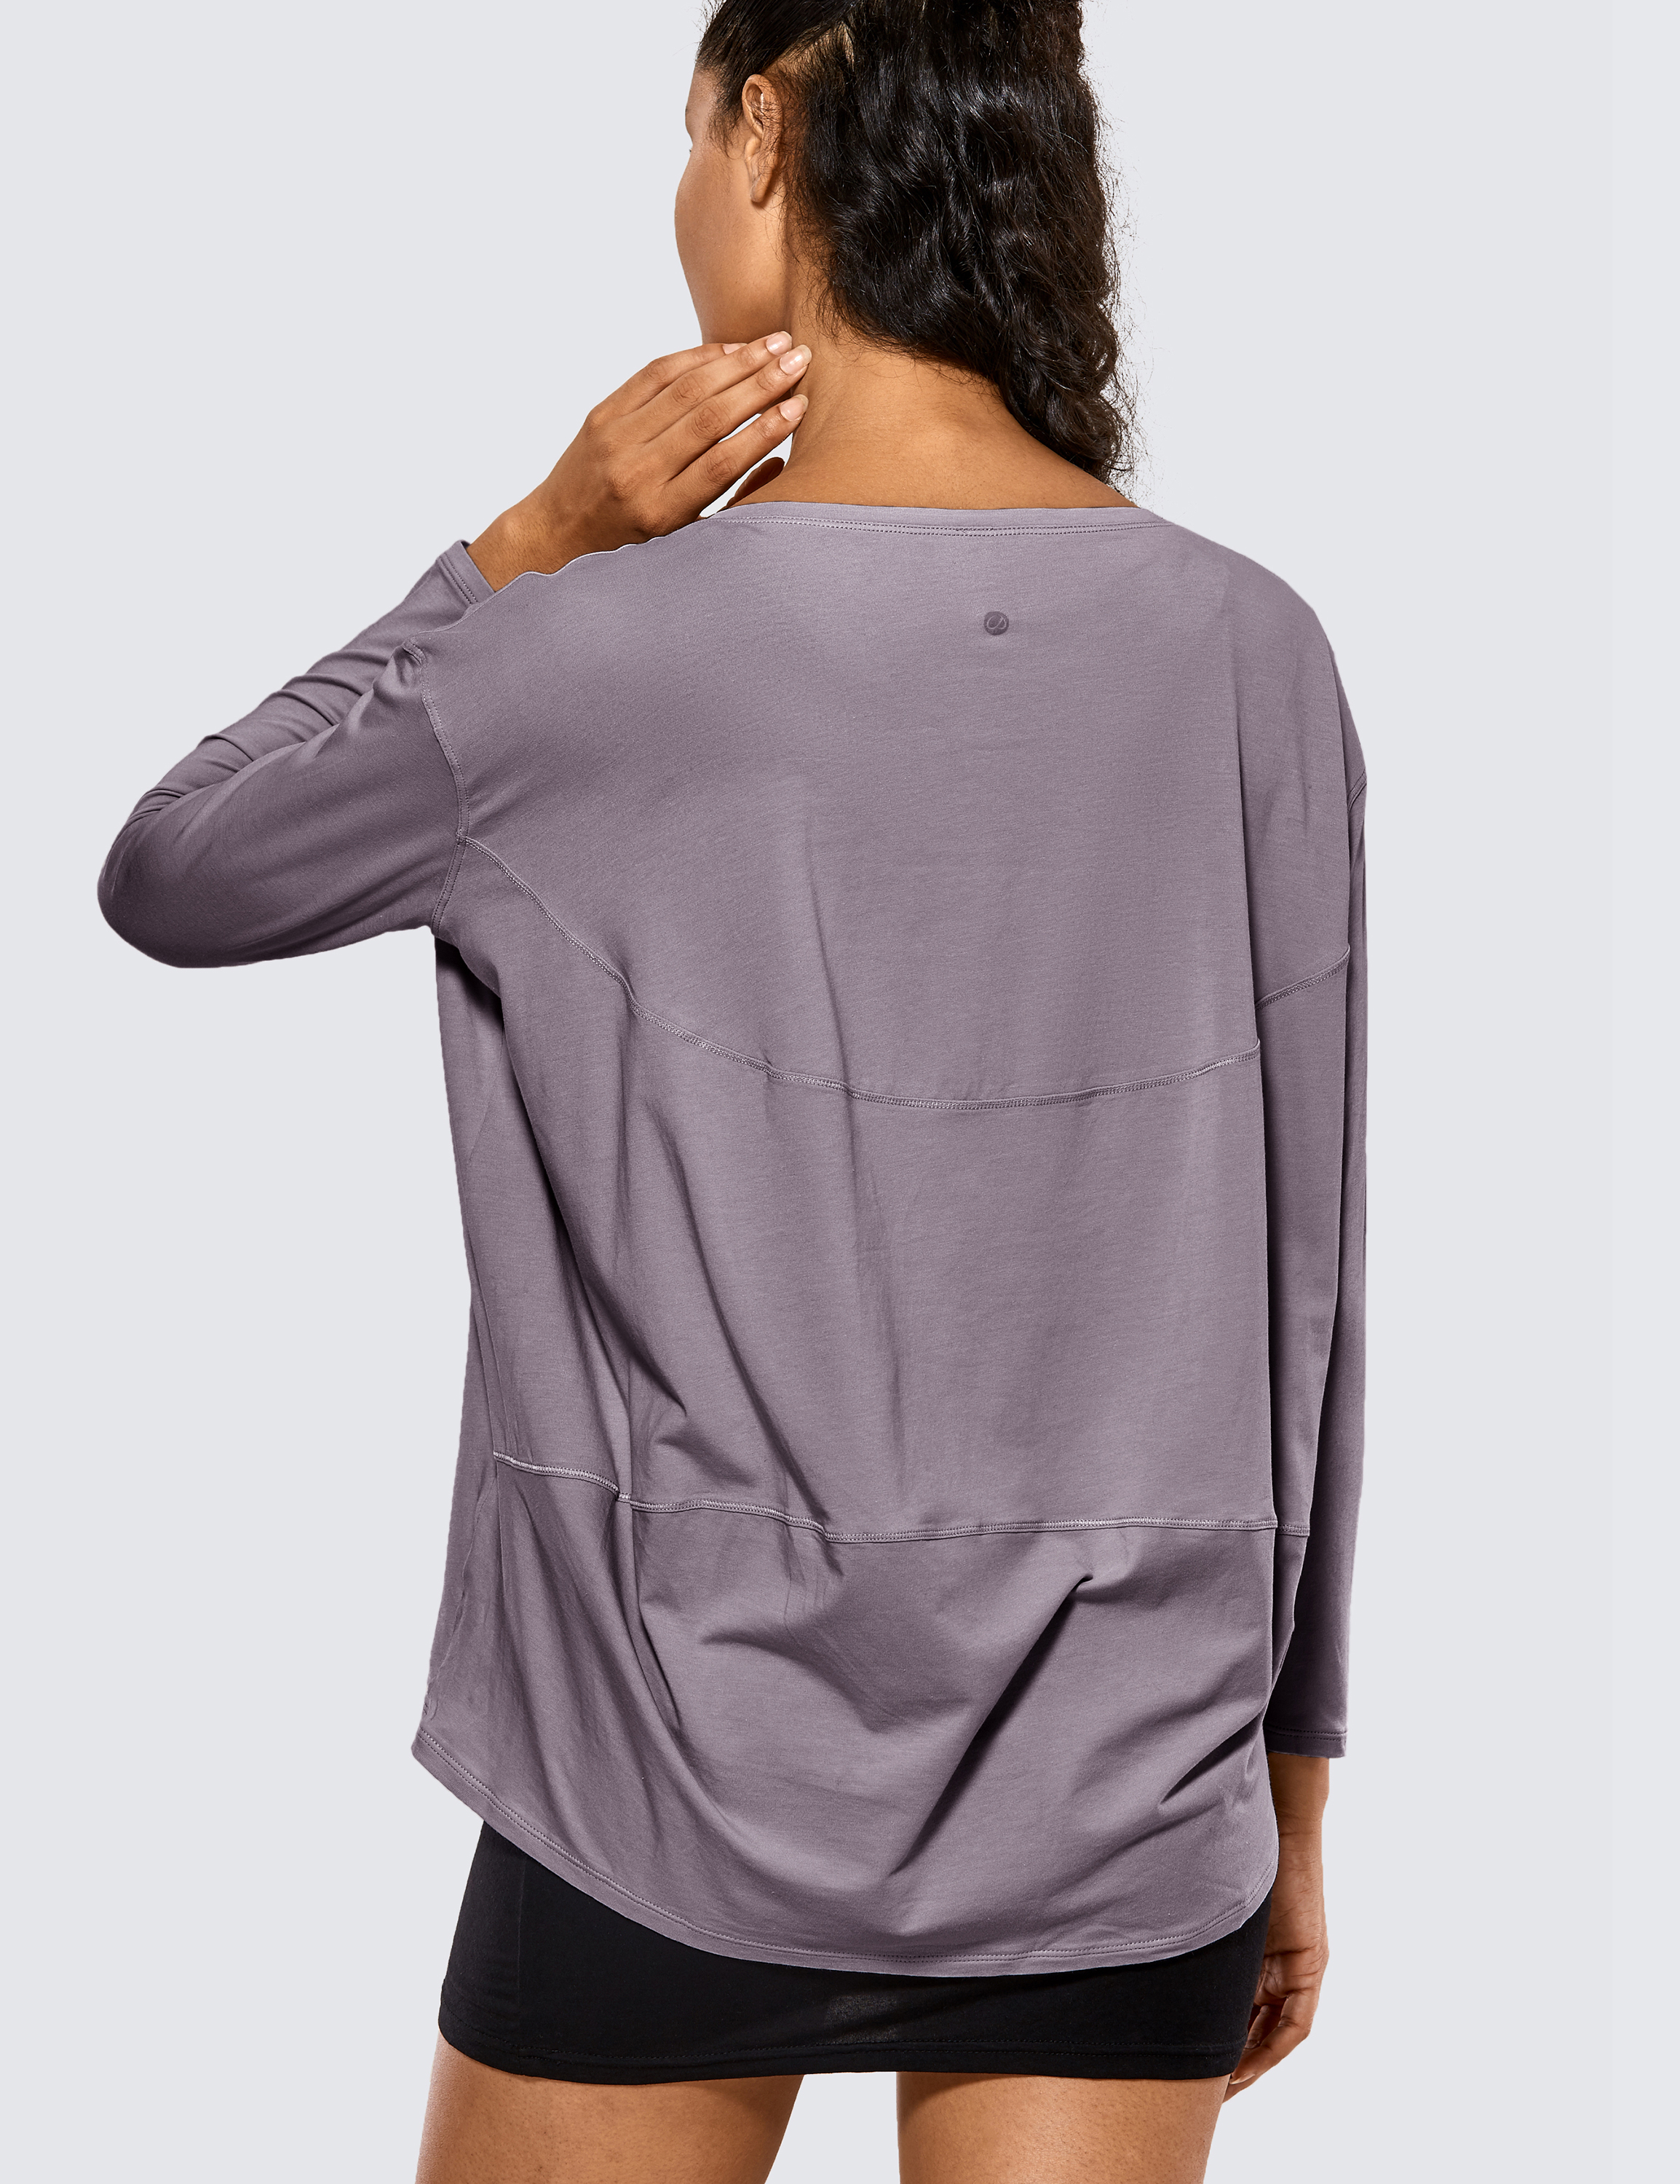 CRZ YOGA Women's Pima Cotton Loose Cropped Tank Tops Workout High Neck  Sleeveless Athletic Gym Shirts Black S price in UAE,  UAE